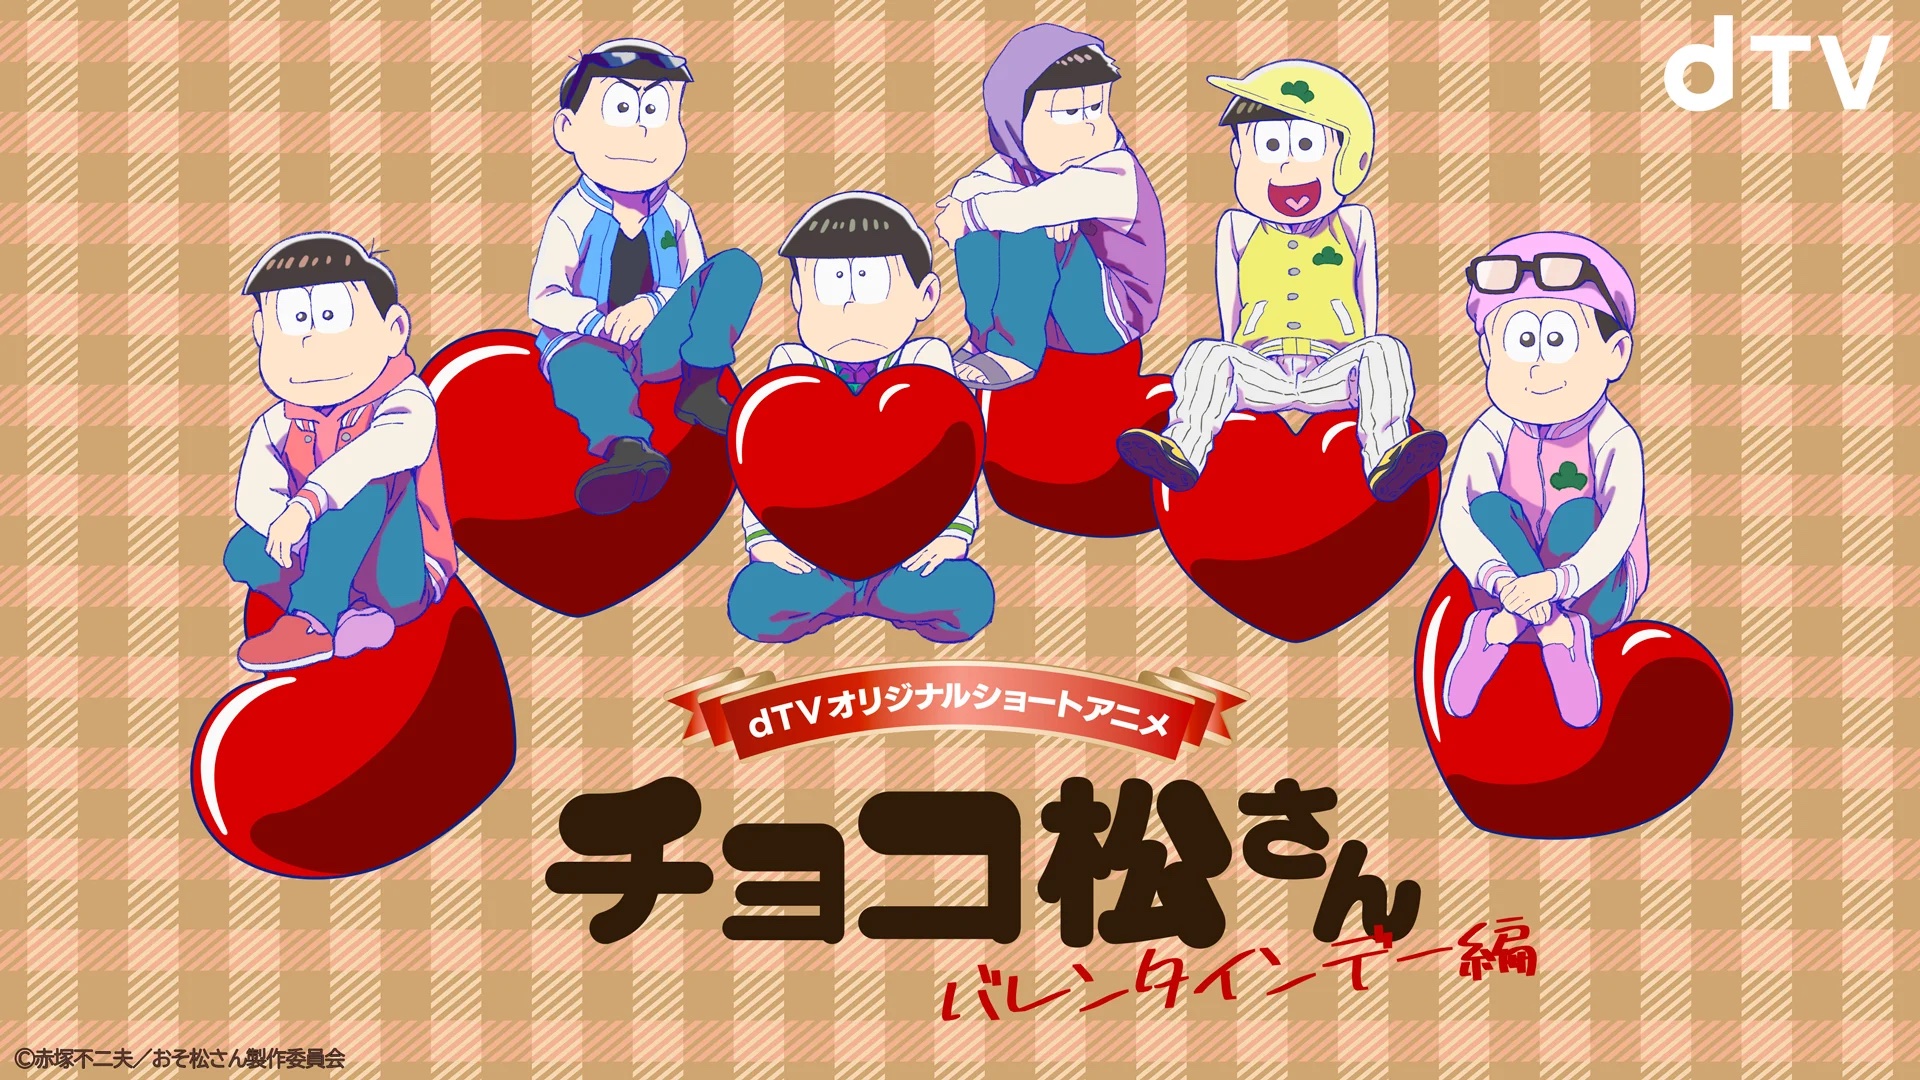 Dtvオリジナルショートアニメ チョコ松さん バレンタインデー編 メインビジュアル にじめん